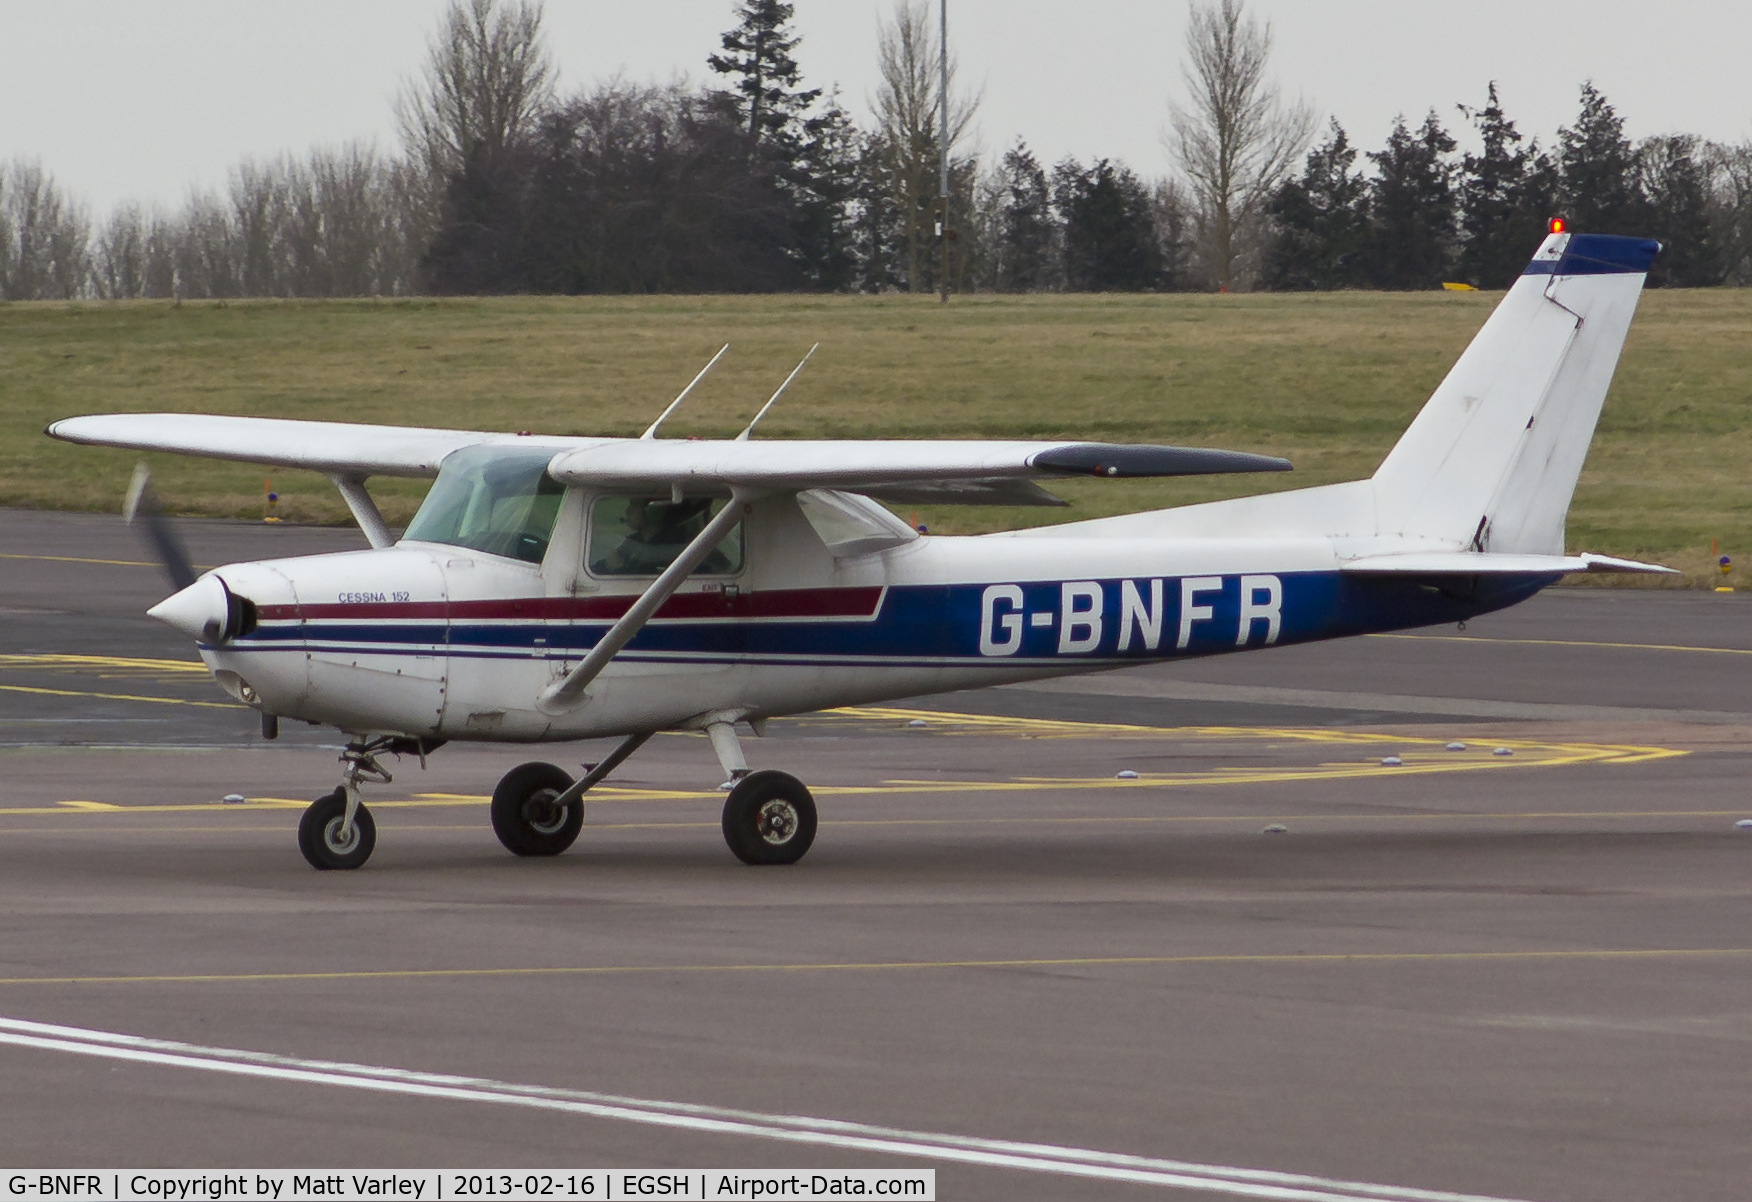 G-BNFR, 1978 Cessna 152 C/N 15282035, Arriving at SaxonAir.